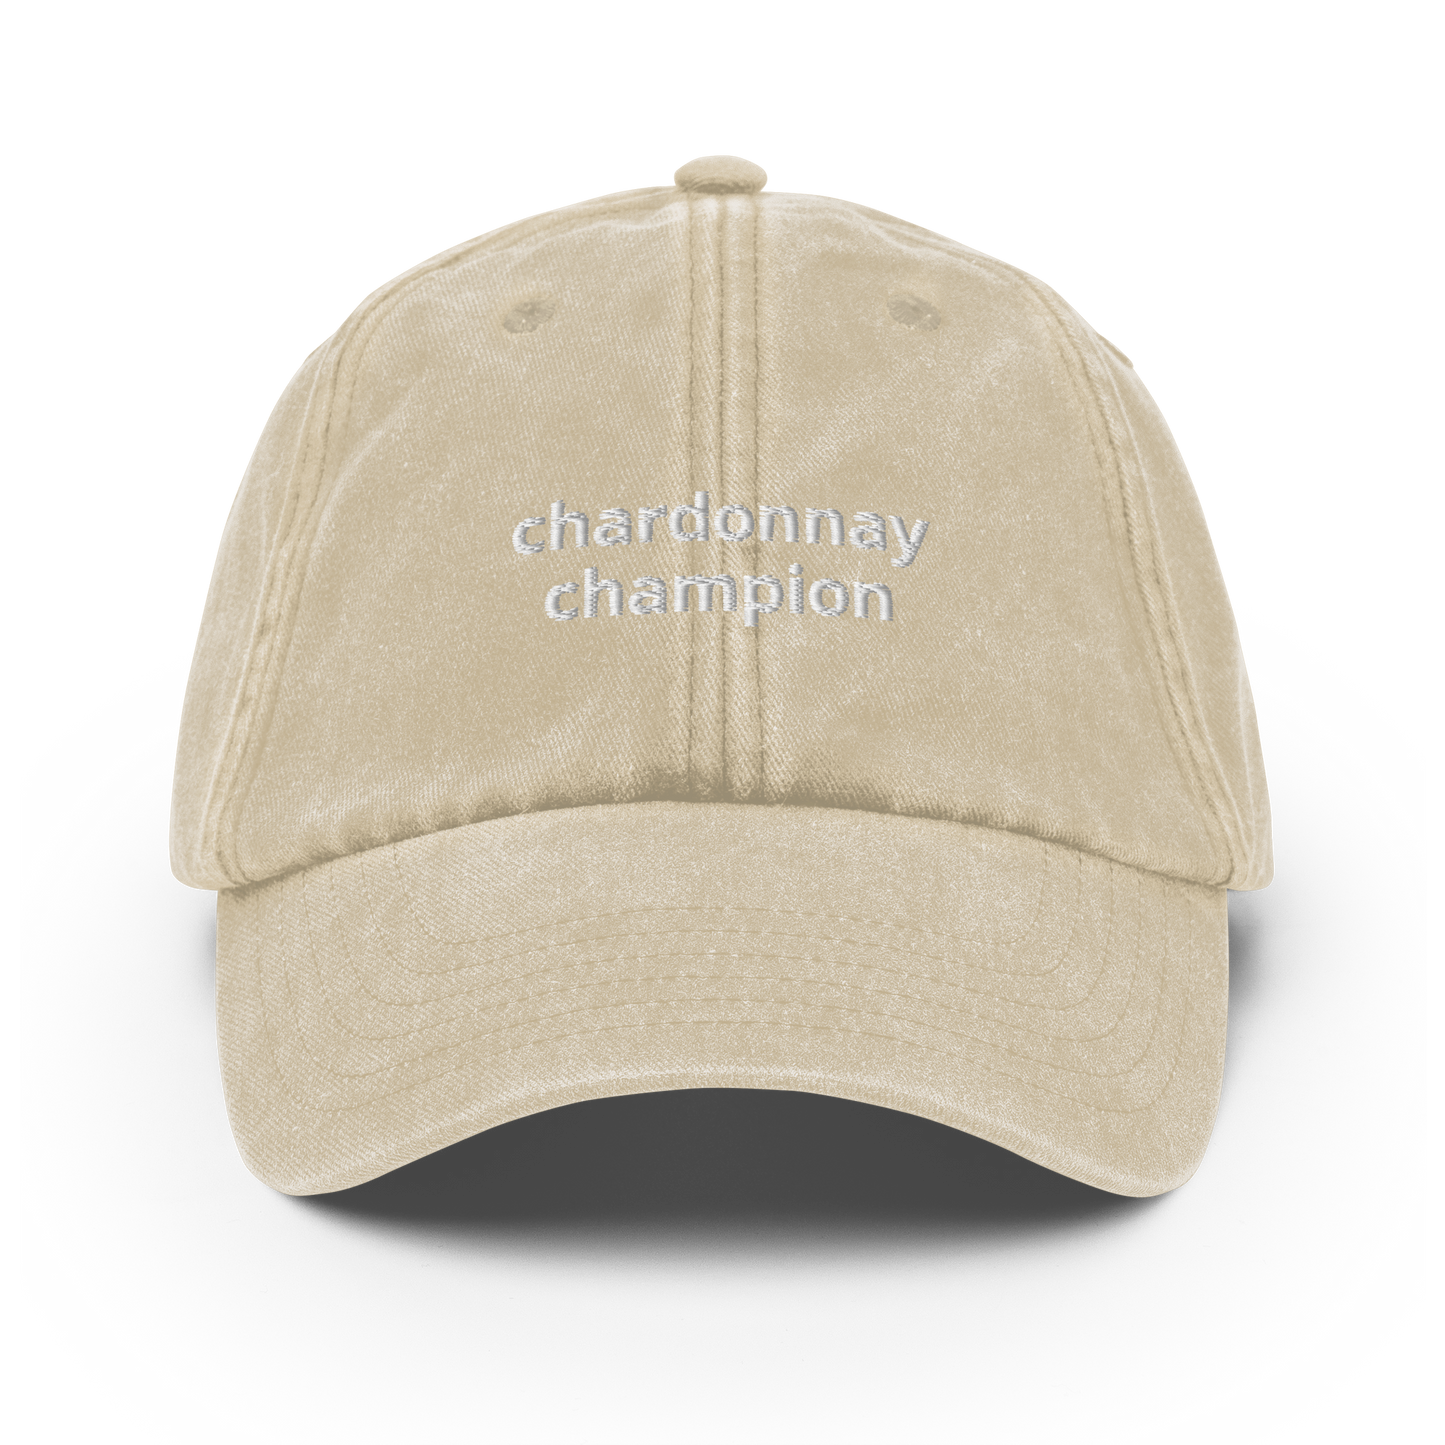 Chardonnay Champion - Vintage Hat